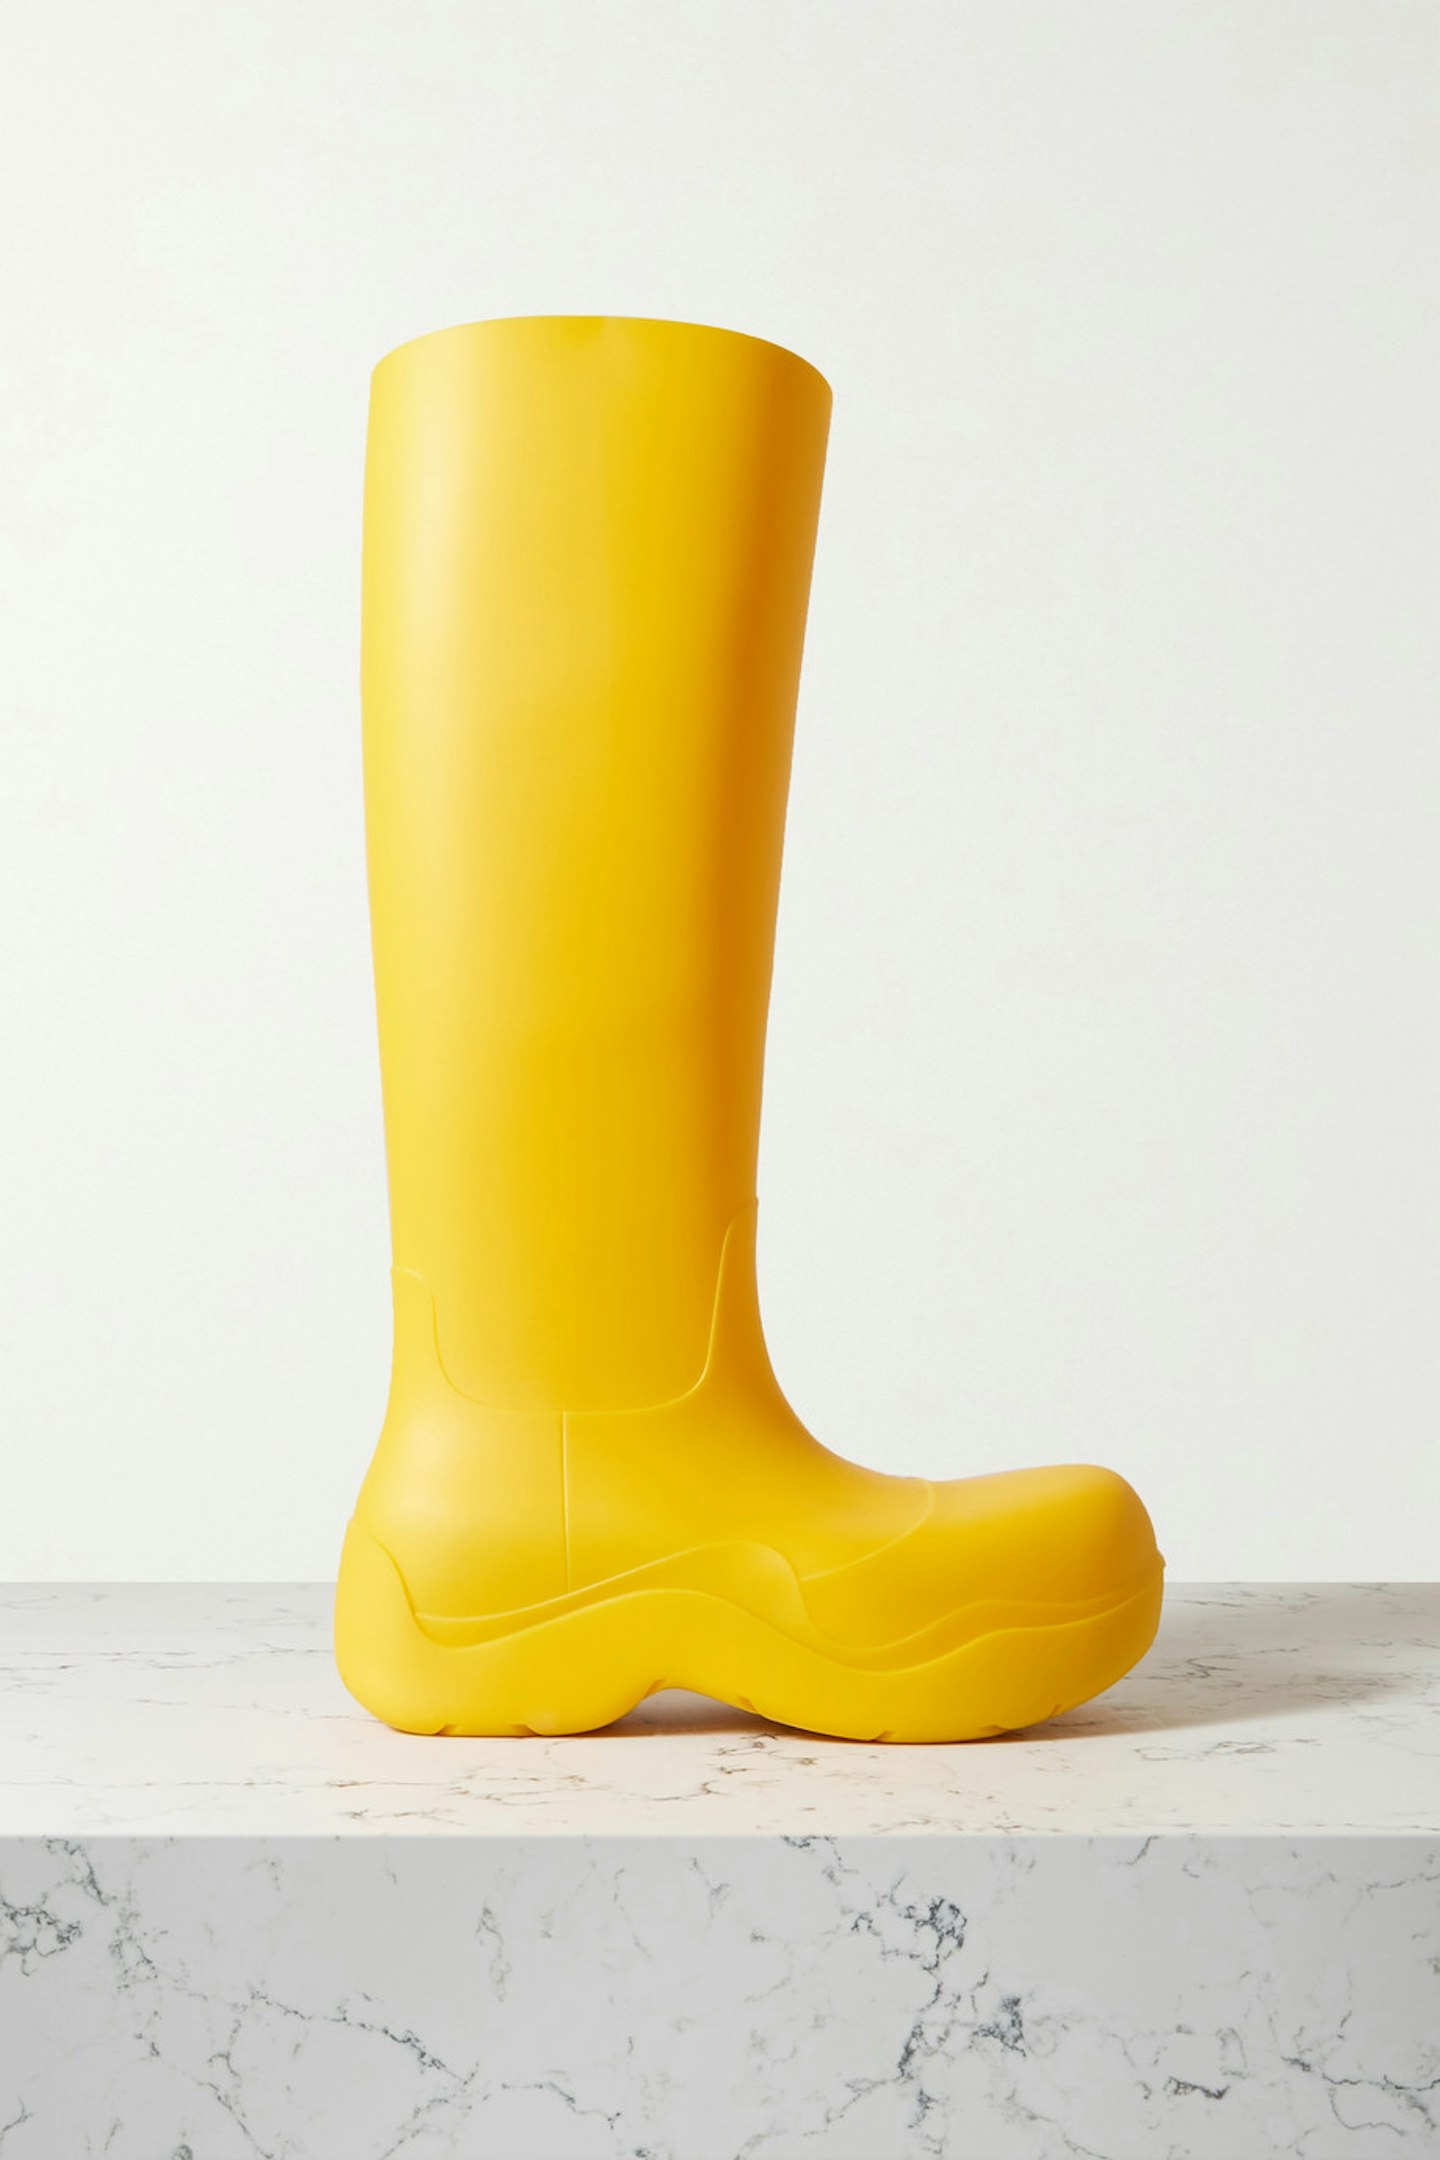 Bottega Veneta, The Puddle Rubber Knee Boots, £560 at Net-a-Porter